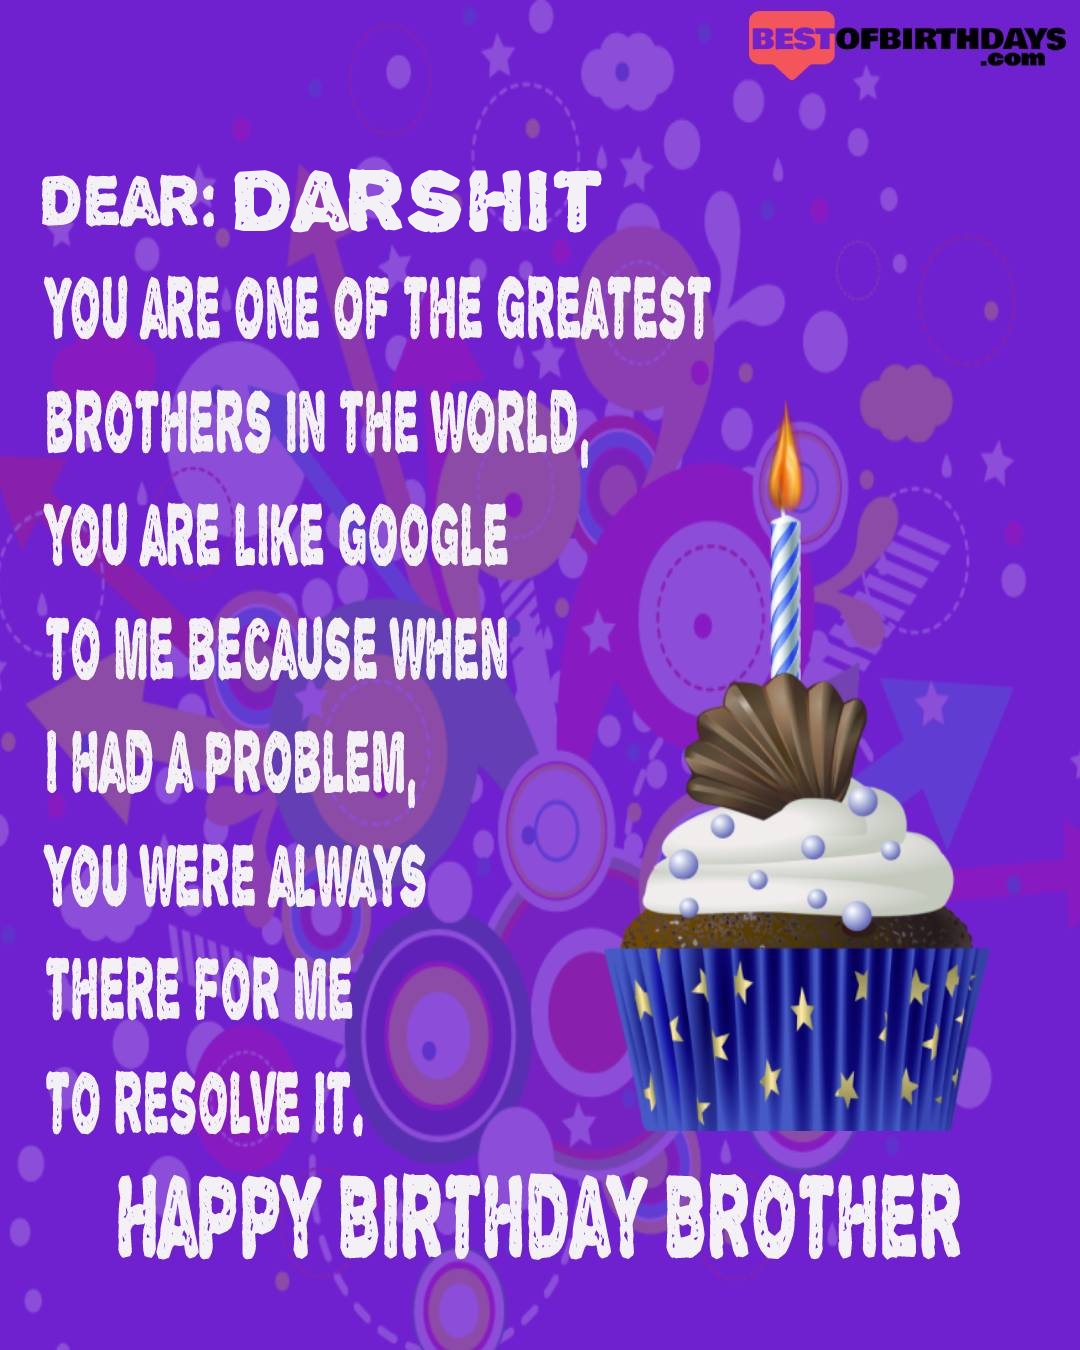 Happy birthday darshit bhai brother bro